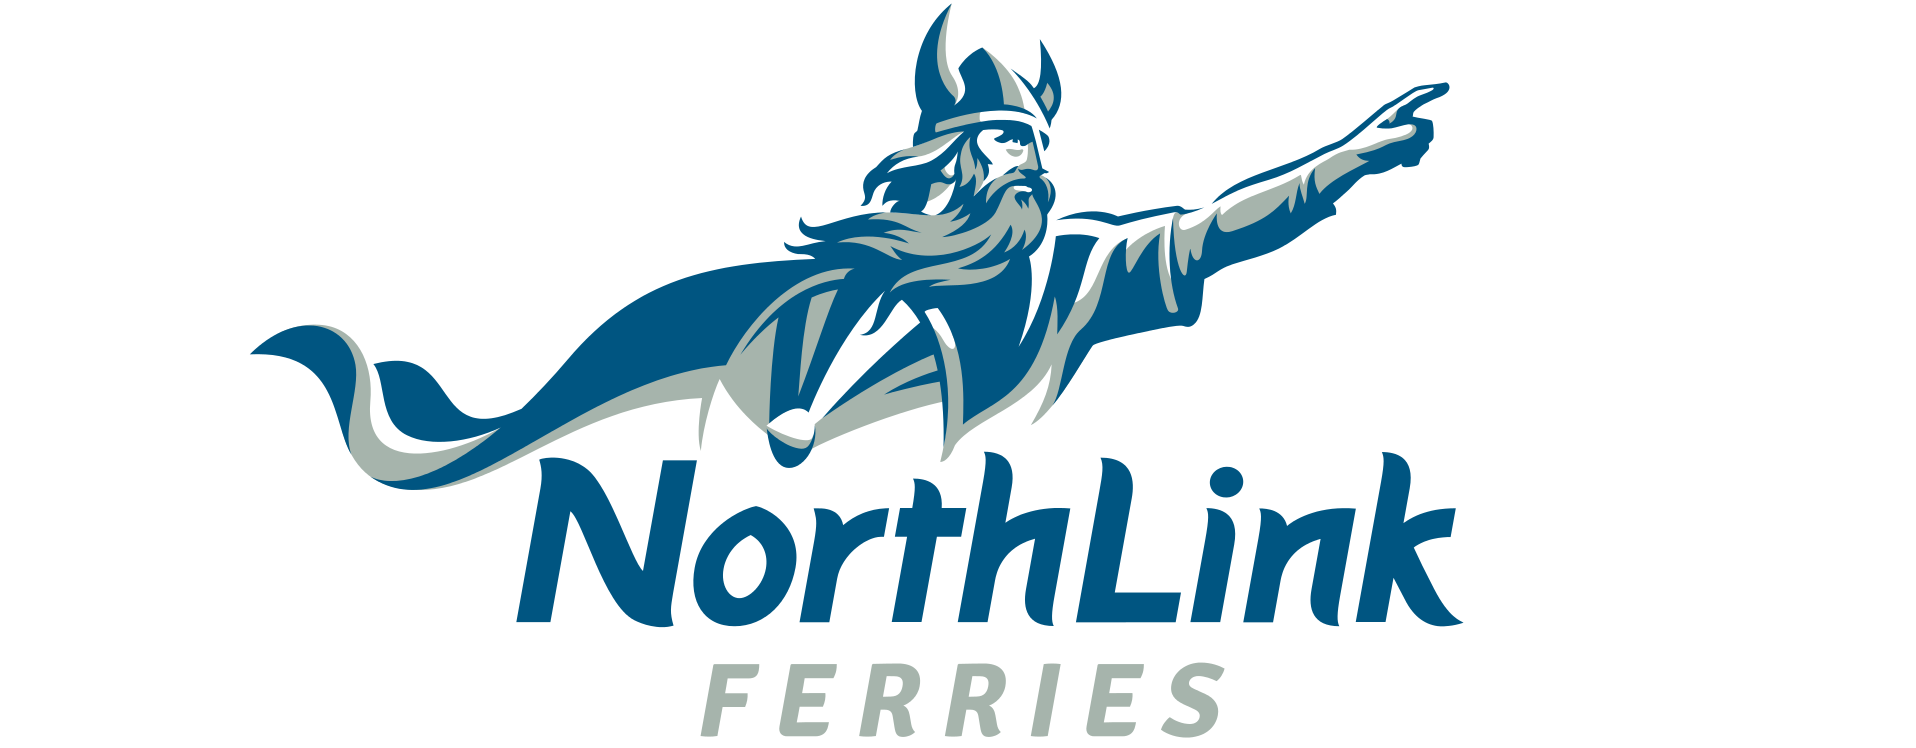 Northlink_serco_logo.svg.png